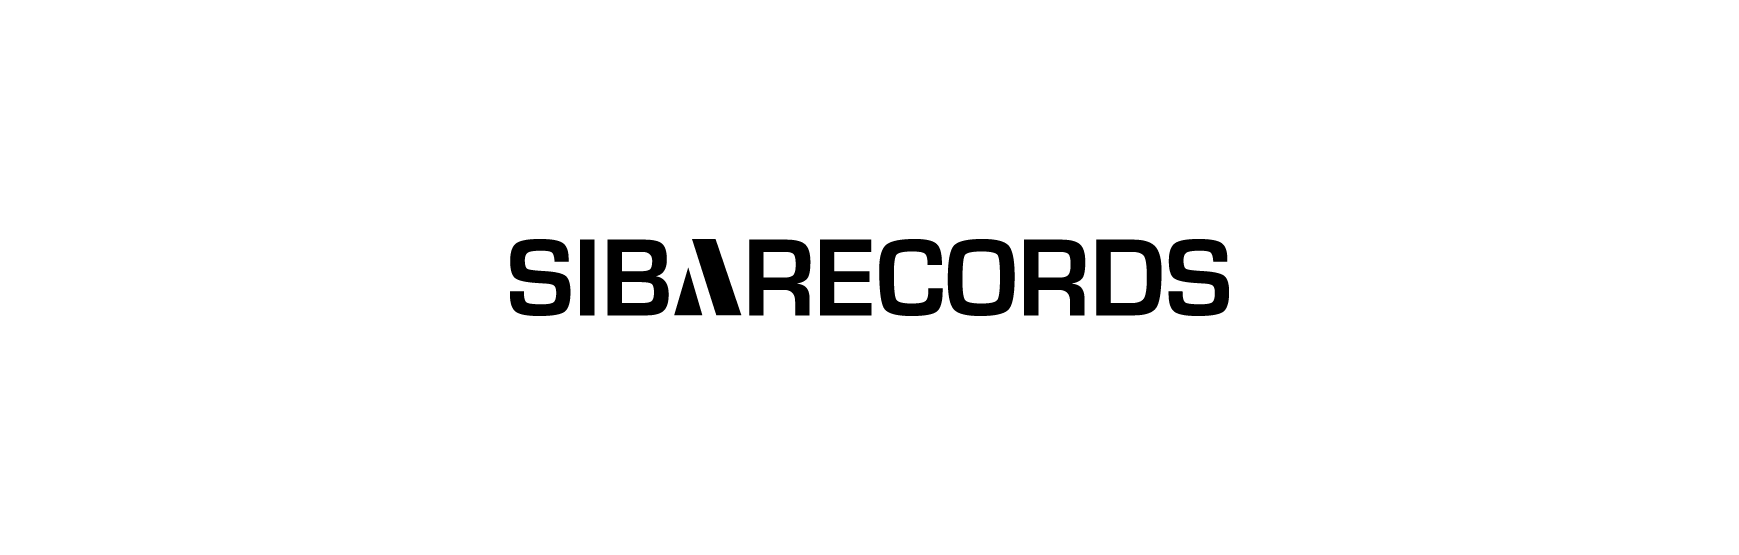 Kuvassa Sibarecordsin logo.